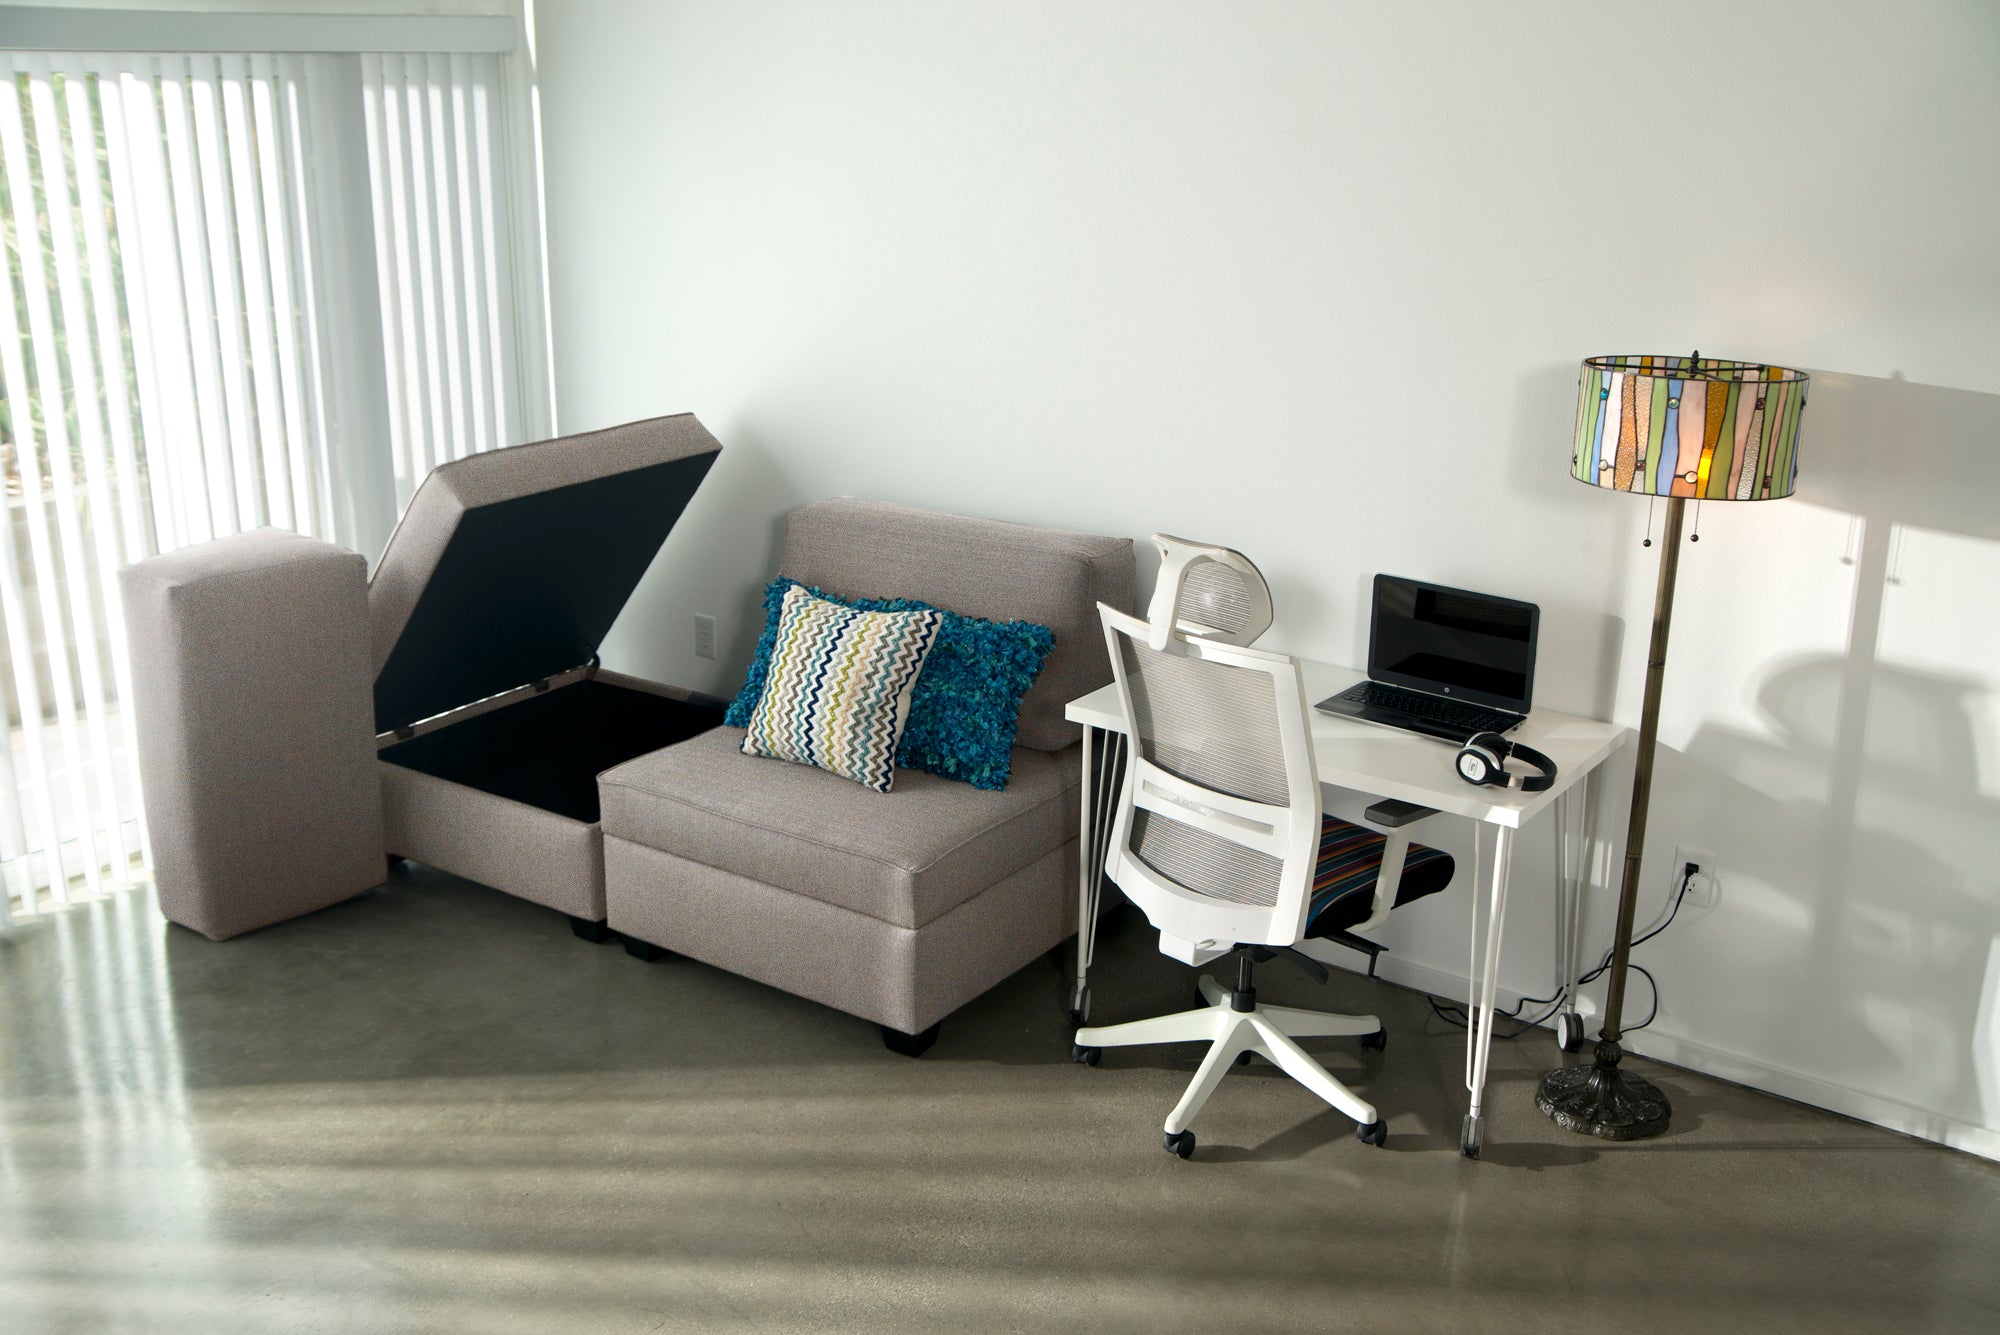 Duobeds Sofa Corner Pillow Corner comfort awaits. – DuoBed Store